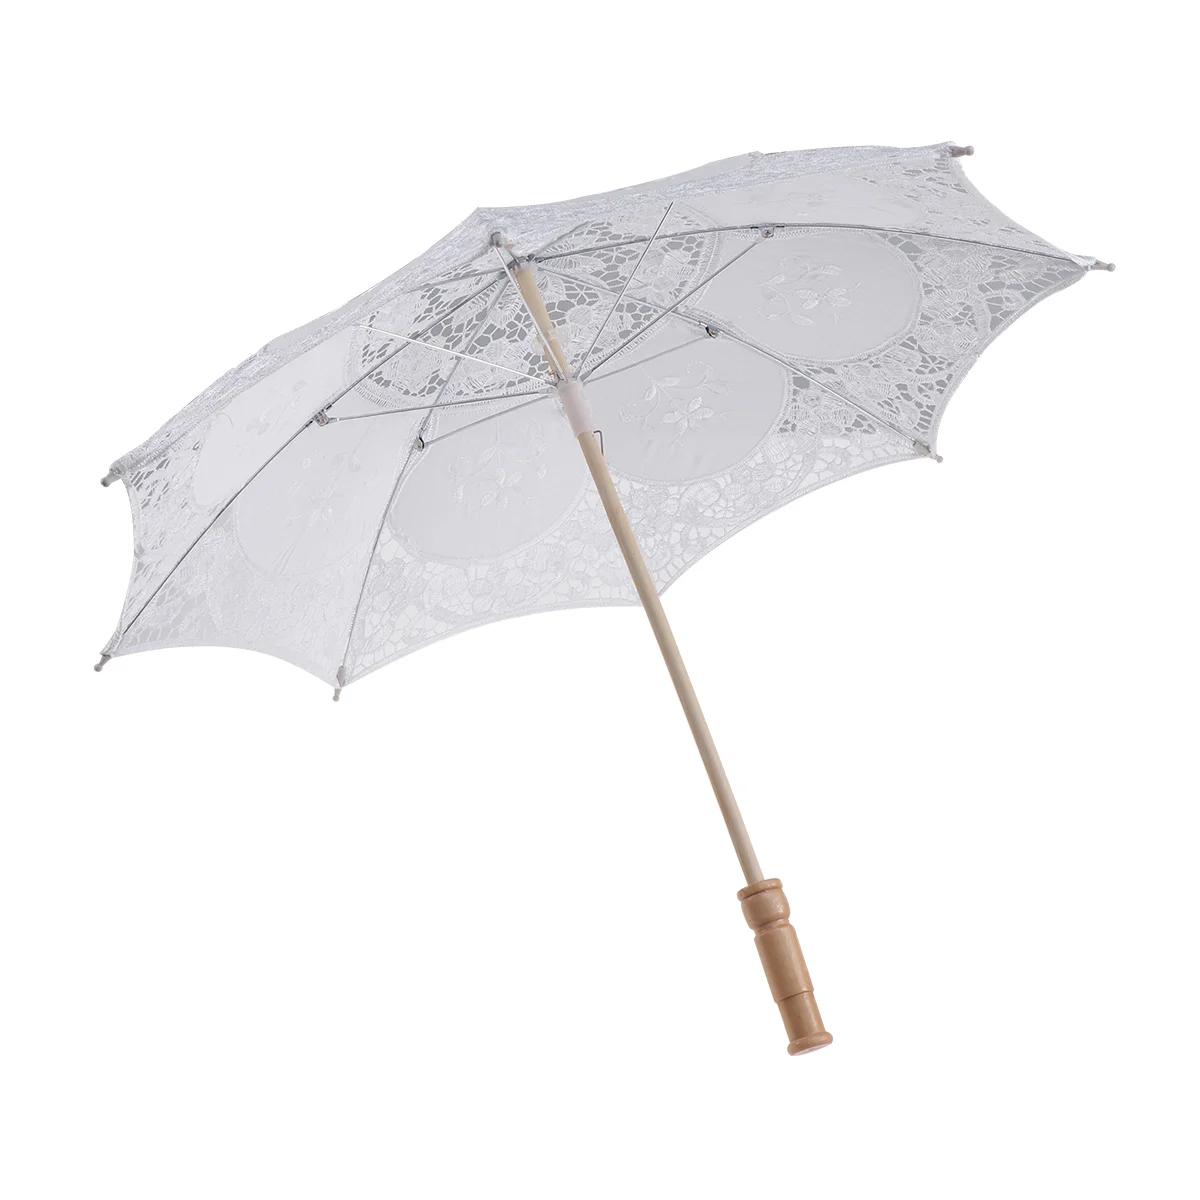 

Lace Umbrella Handmade Cotton Craft Photography Prop Wedding Umbrella Decor Diameter 60cm (White)